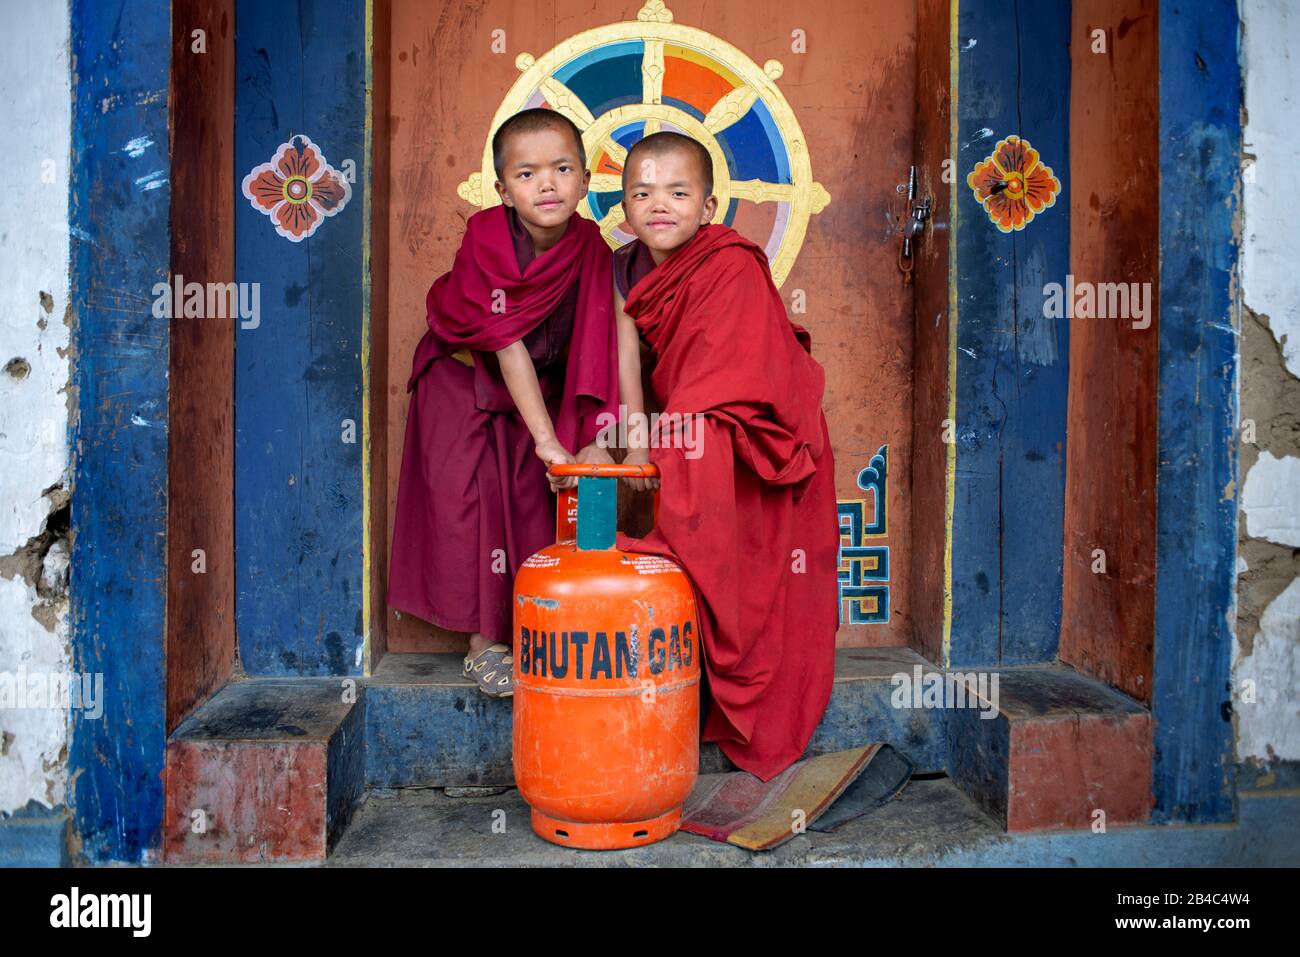 Funny monks with a butane gas bottle in Gangtey Monastery, Phobjikha Valley, Western Bhutan, Asia Stock Photo